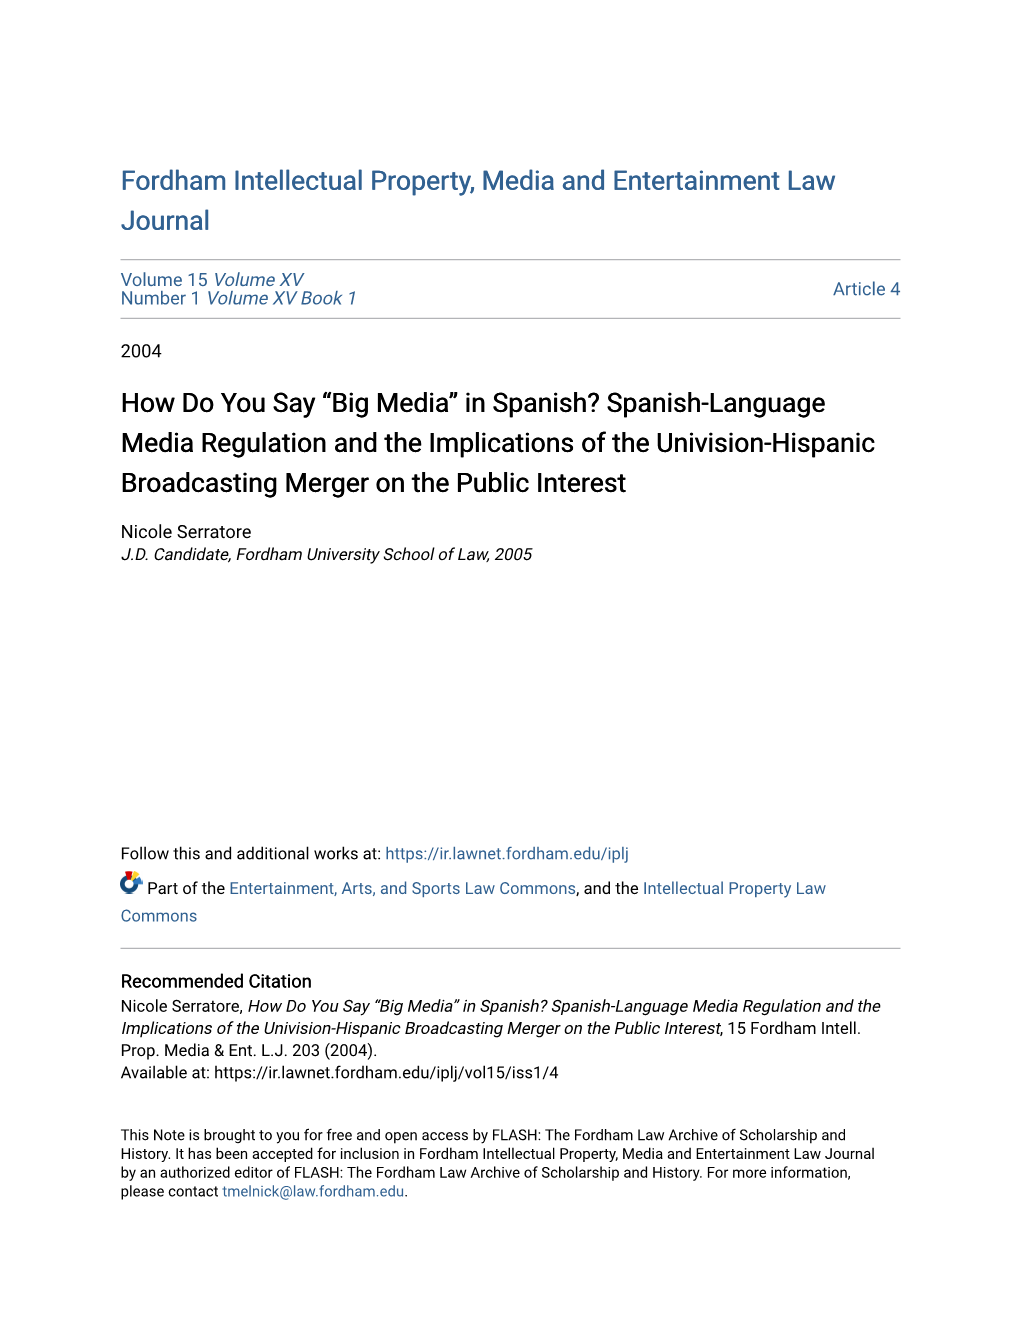 Spanish-Language Media Regulation and the Implications of the Univision-Hispanic Broadcasting Merger on the Public Interest